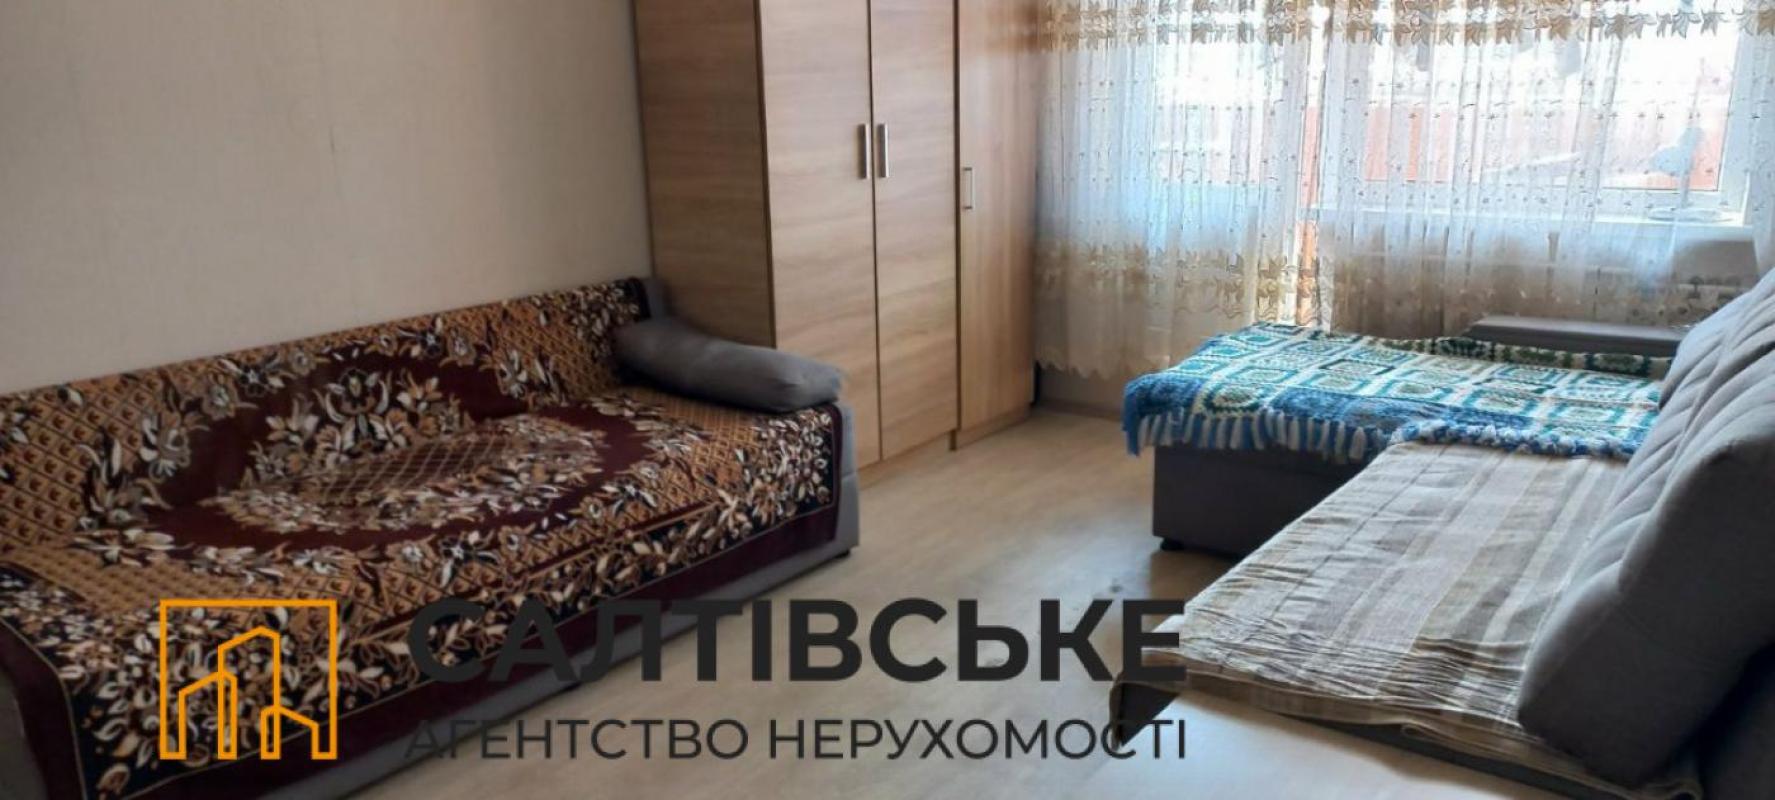 Sale 1 bedroom-(s) apartment 33 sq. m., Yuvileinyi avenue 51